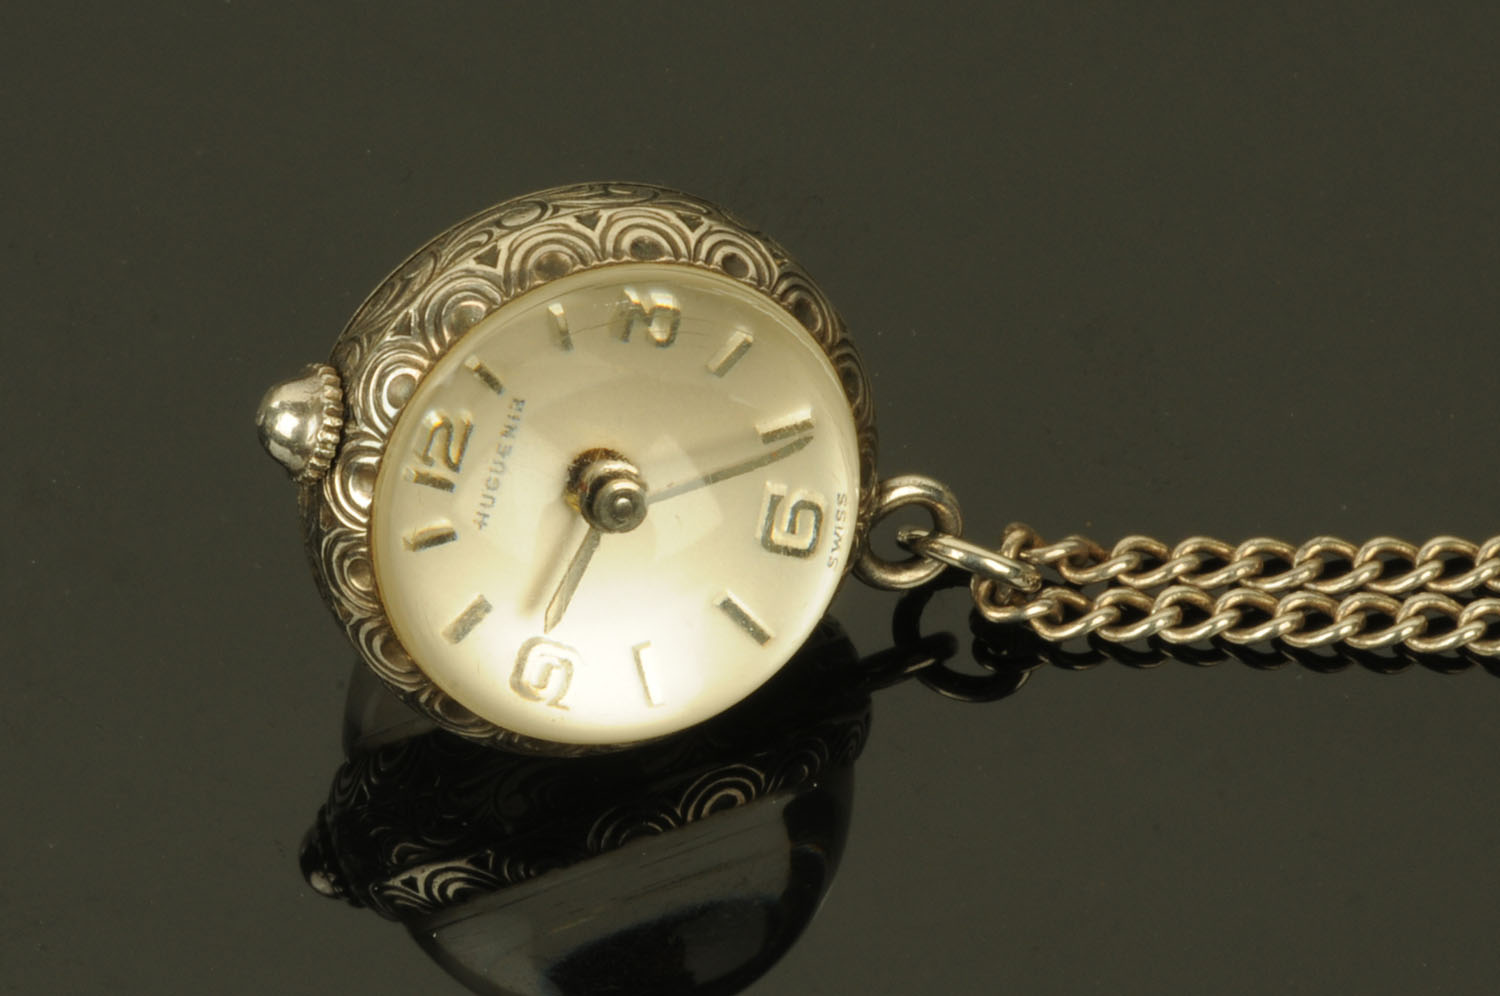 A silver pendant ball watch by Huguenin, on silver chain.